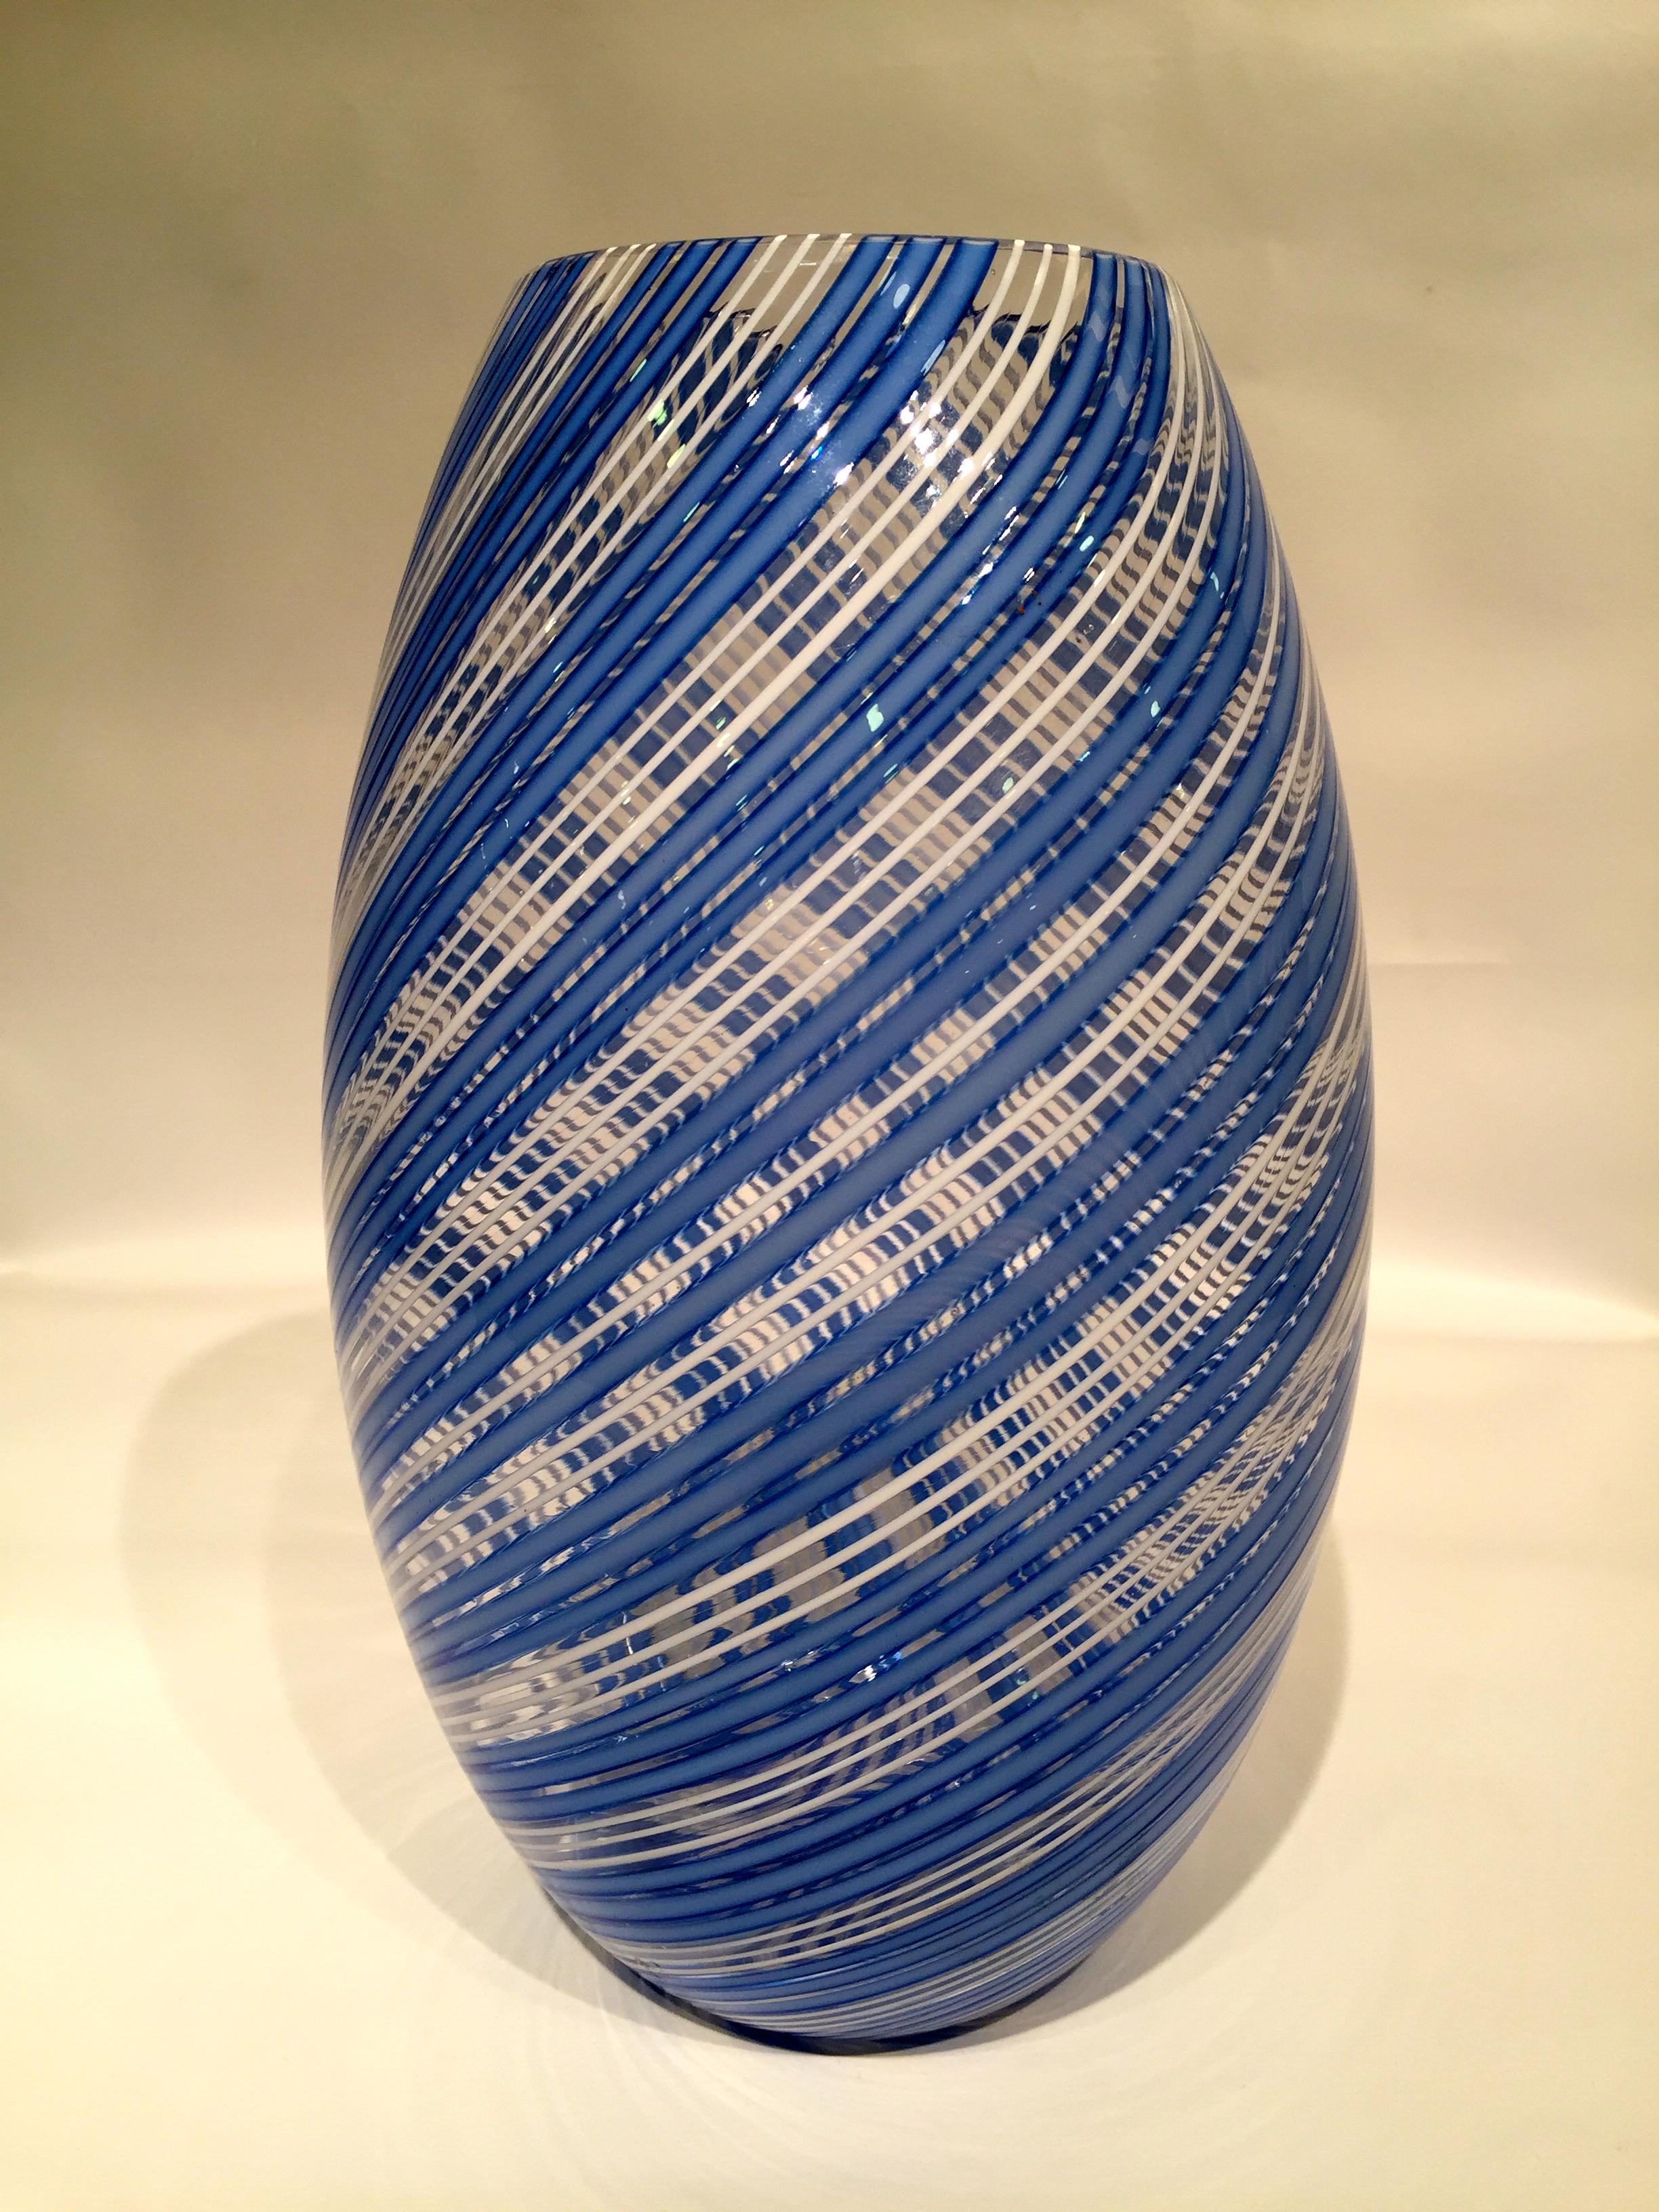 Dino Martens Murano artistic blown glass espiral vase, circa 1950.